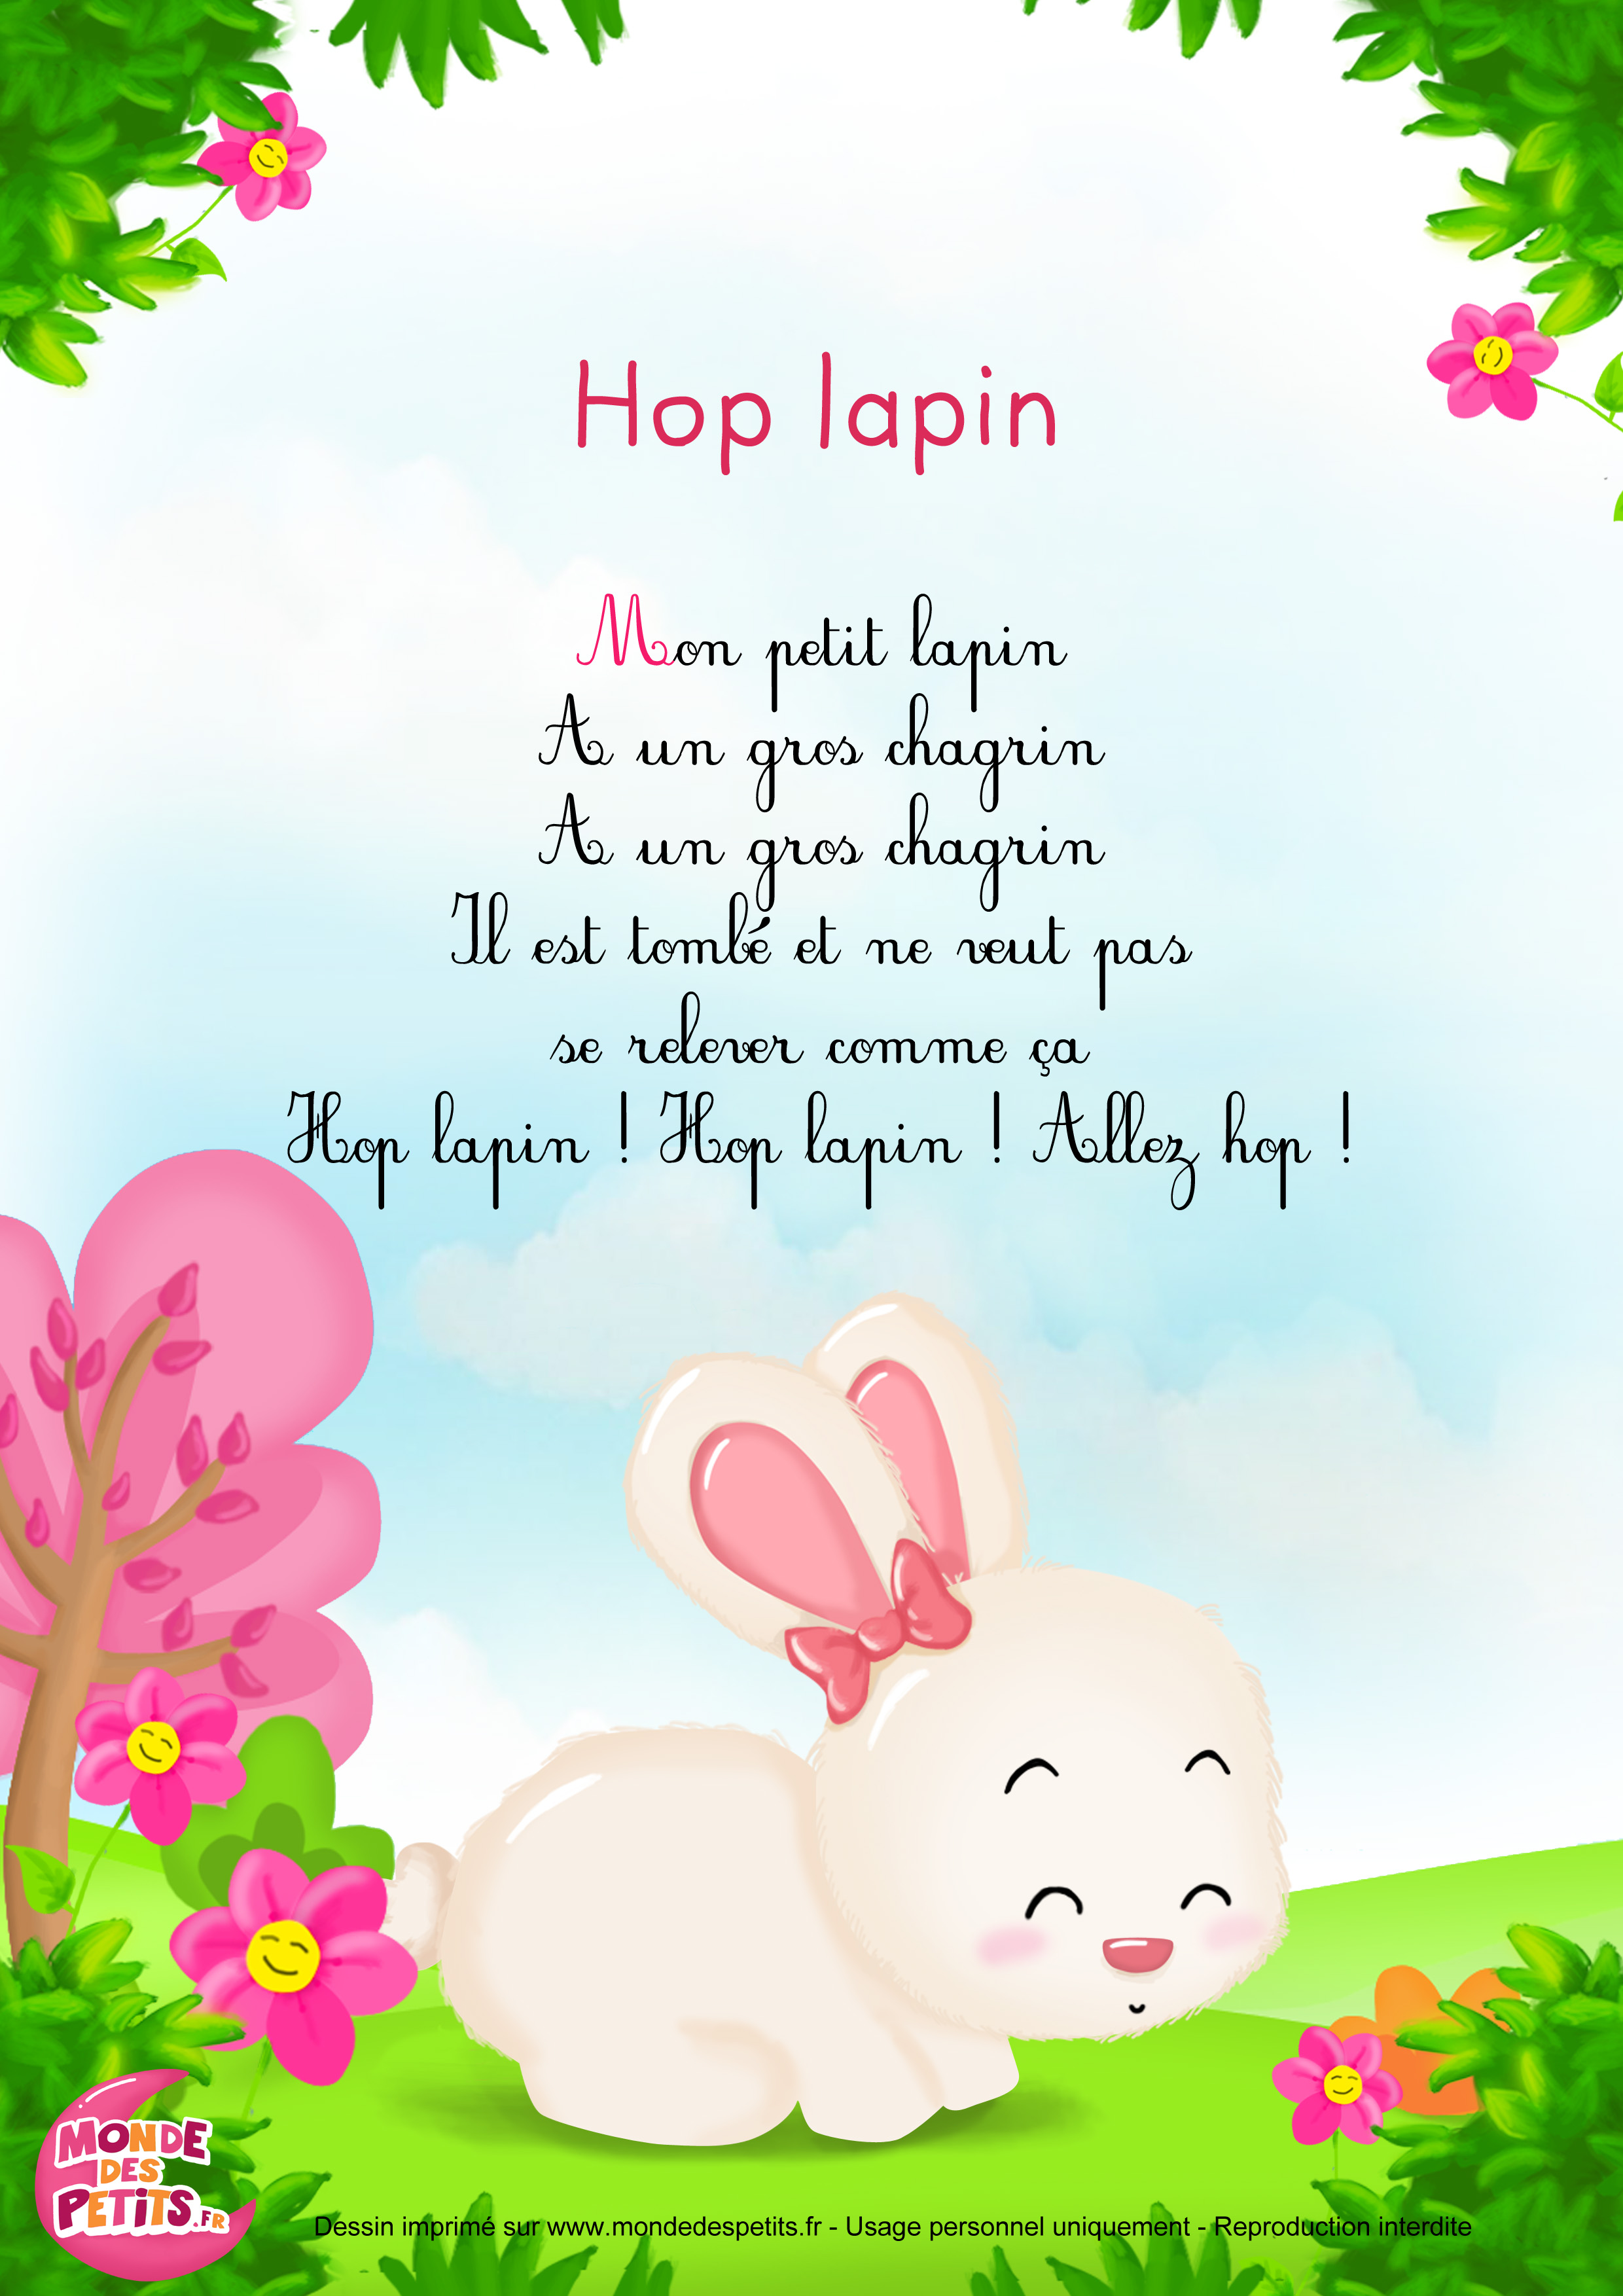 Hop Lapin